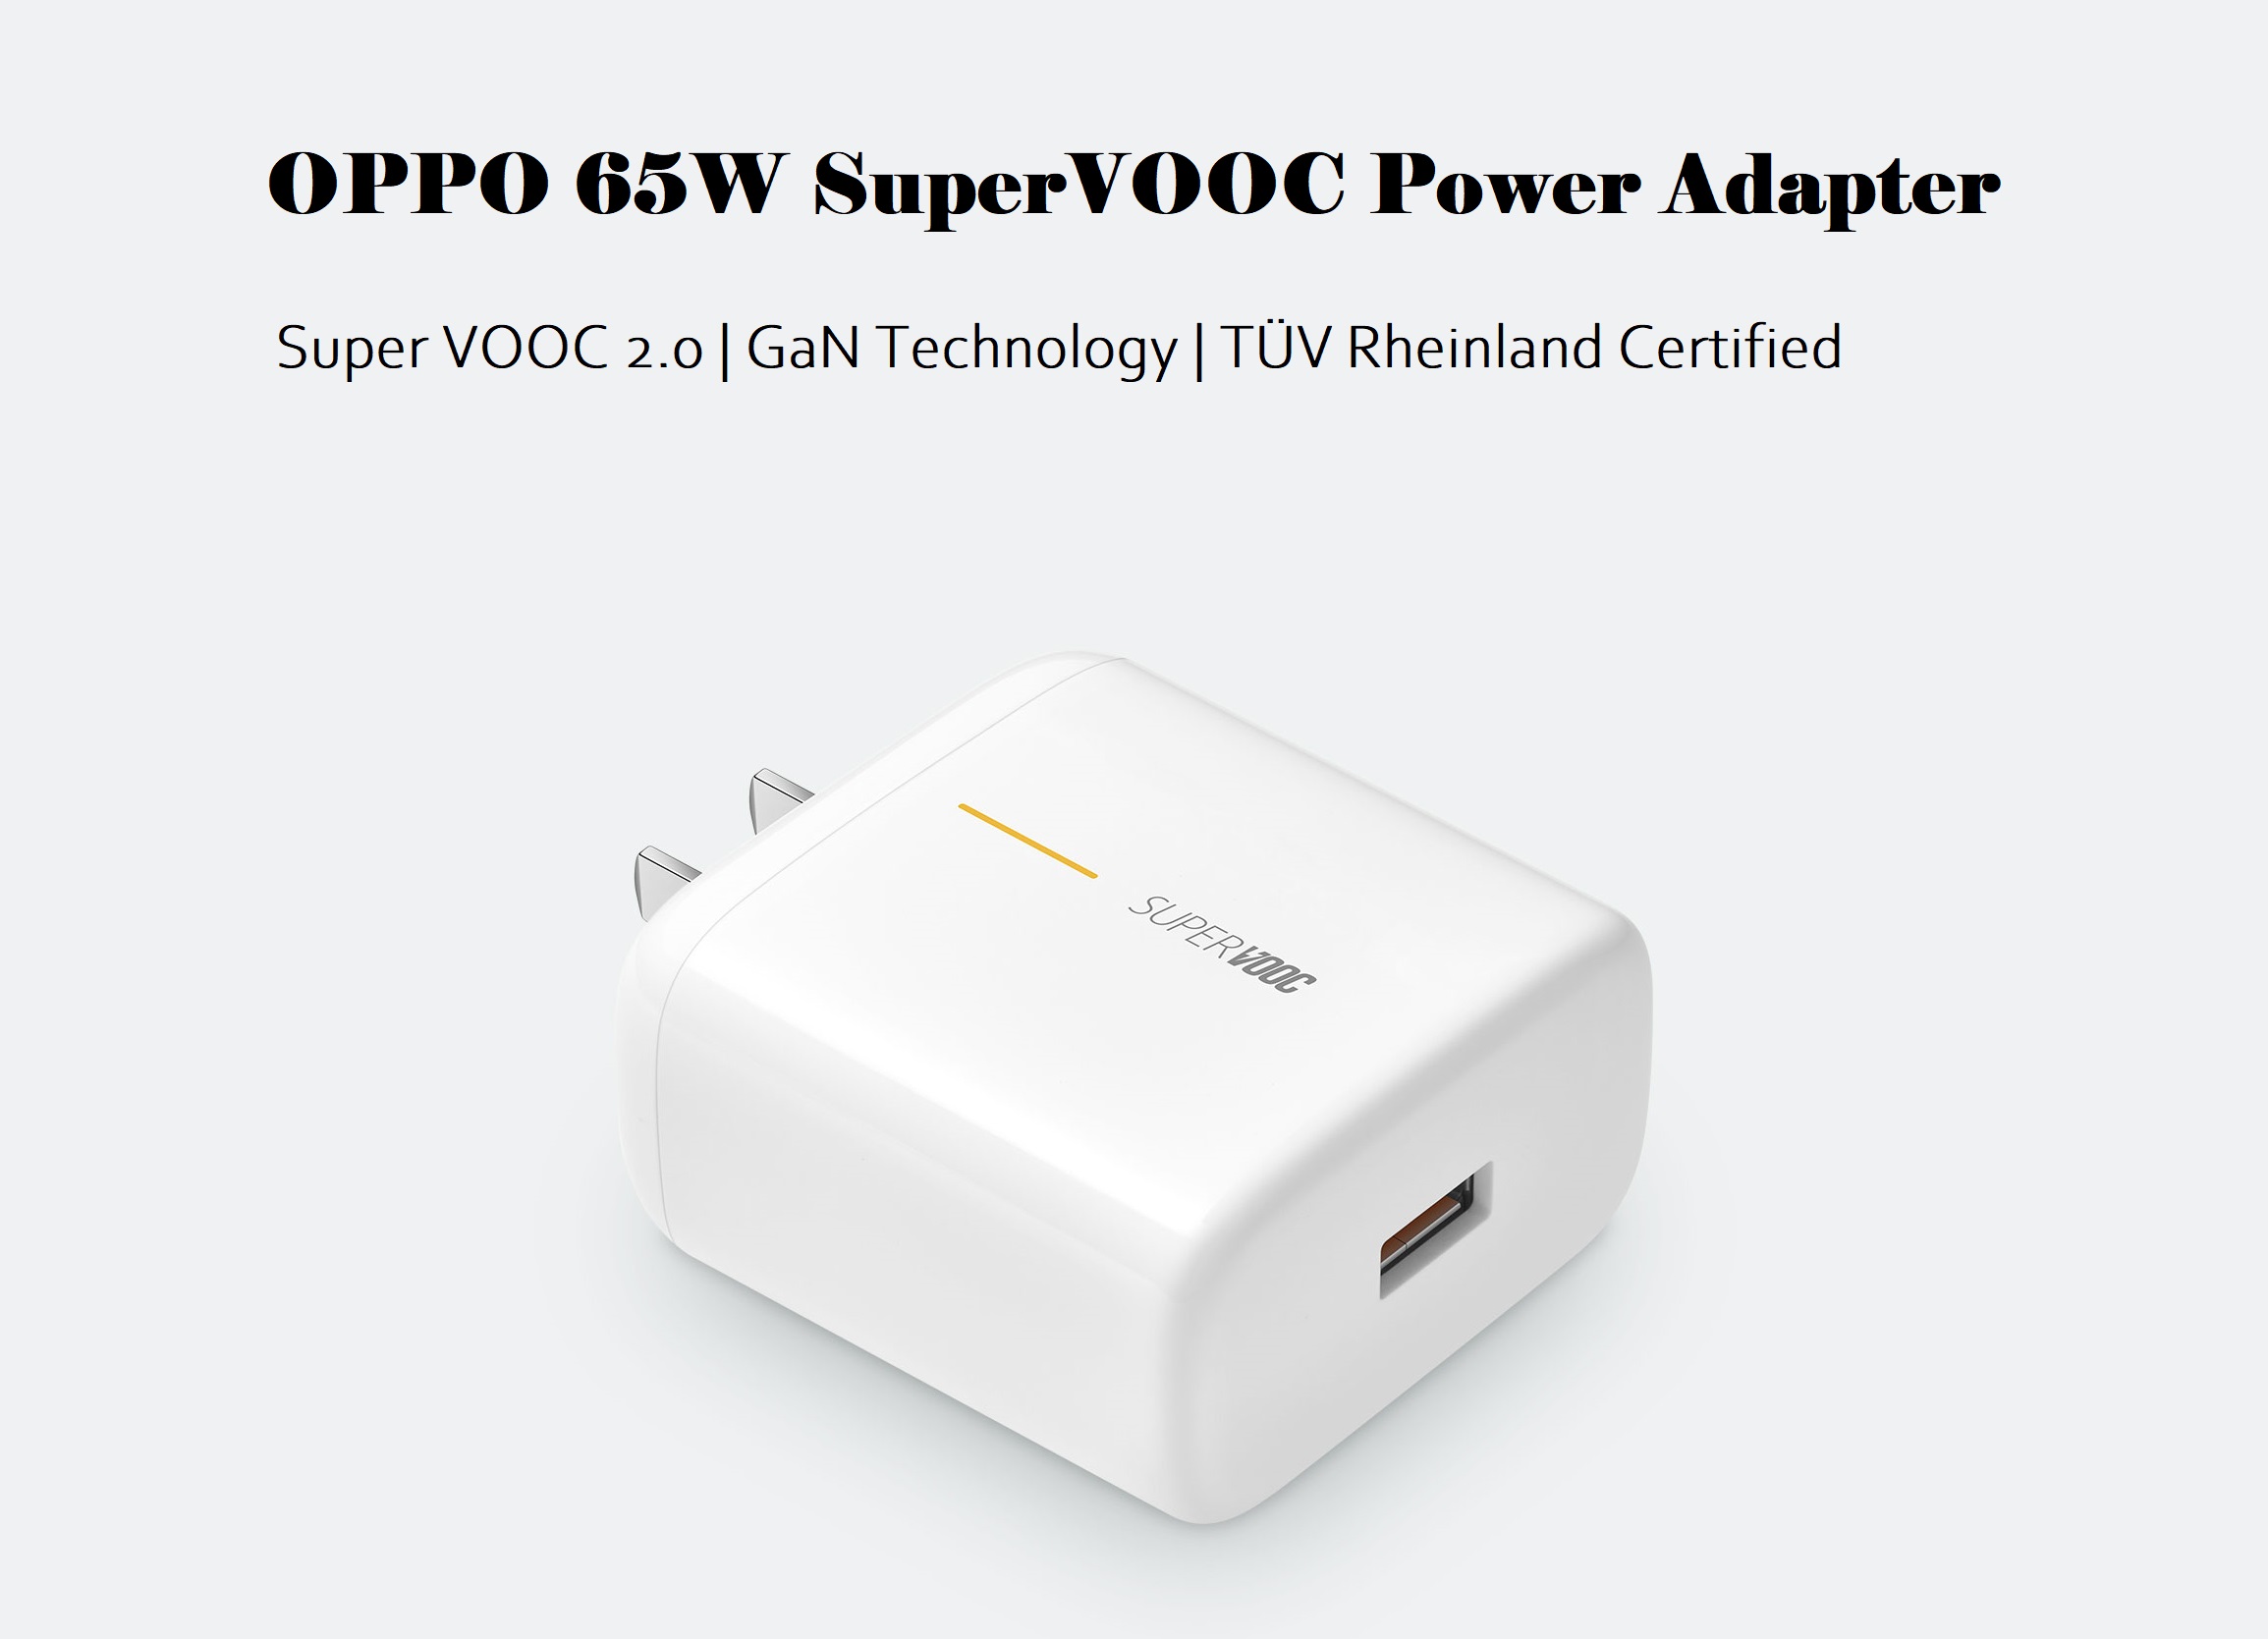 OPPO 65W SuperVOOC Power Adapter